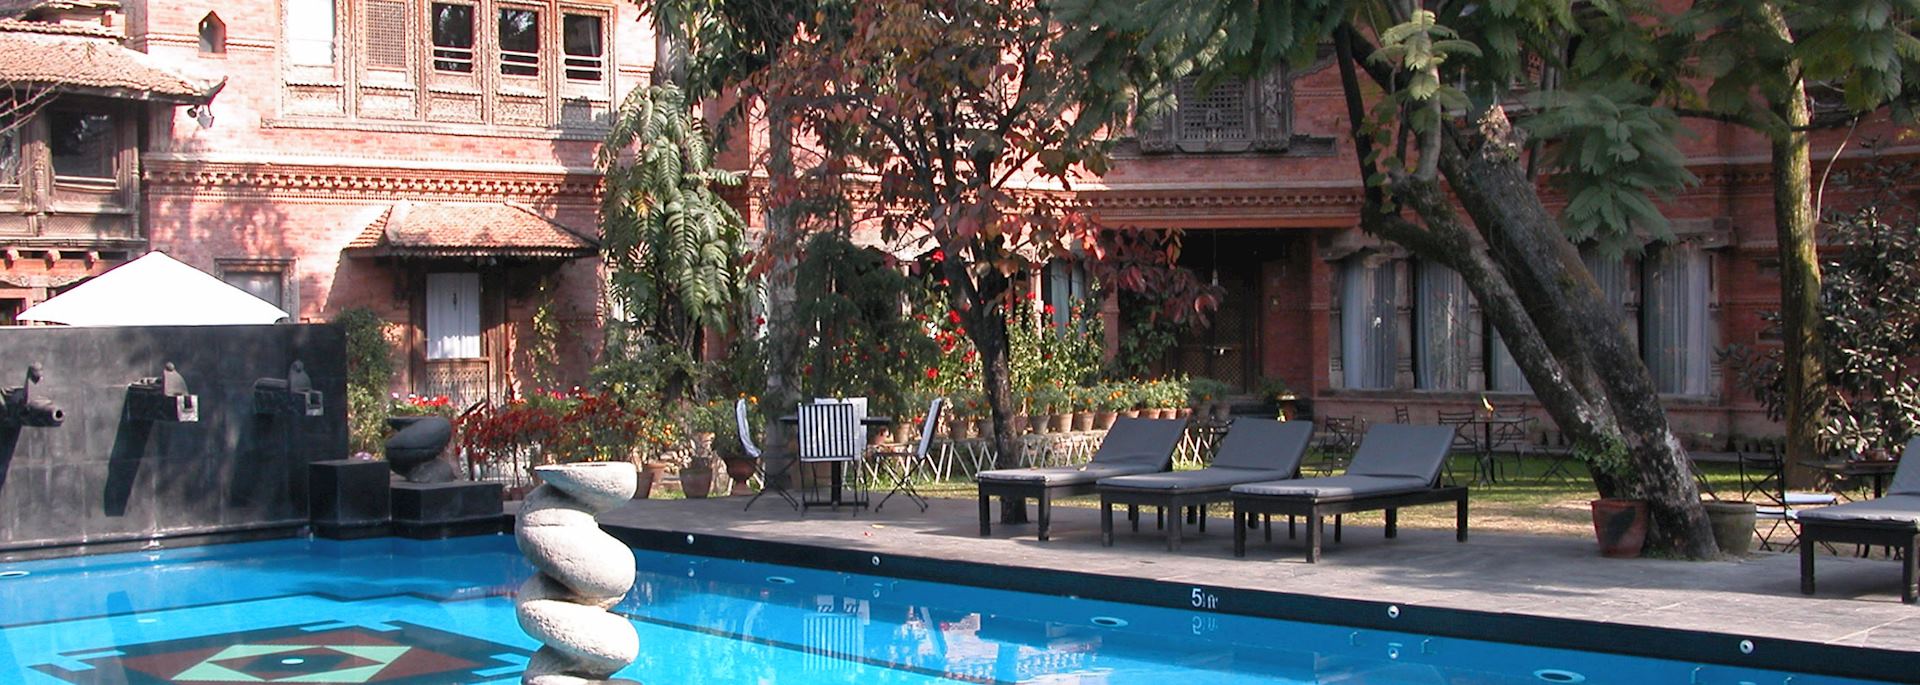 Dwarika's Hotel, Kathmandu